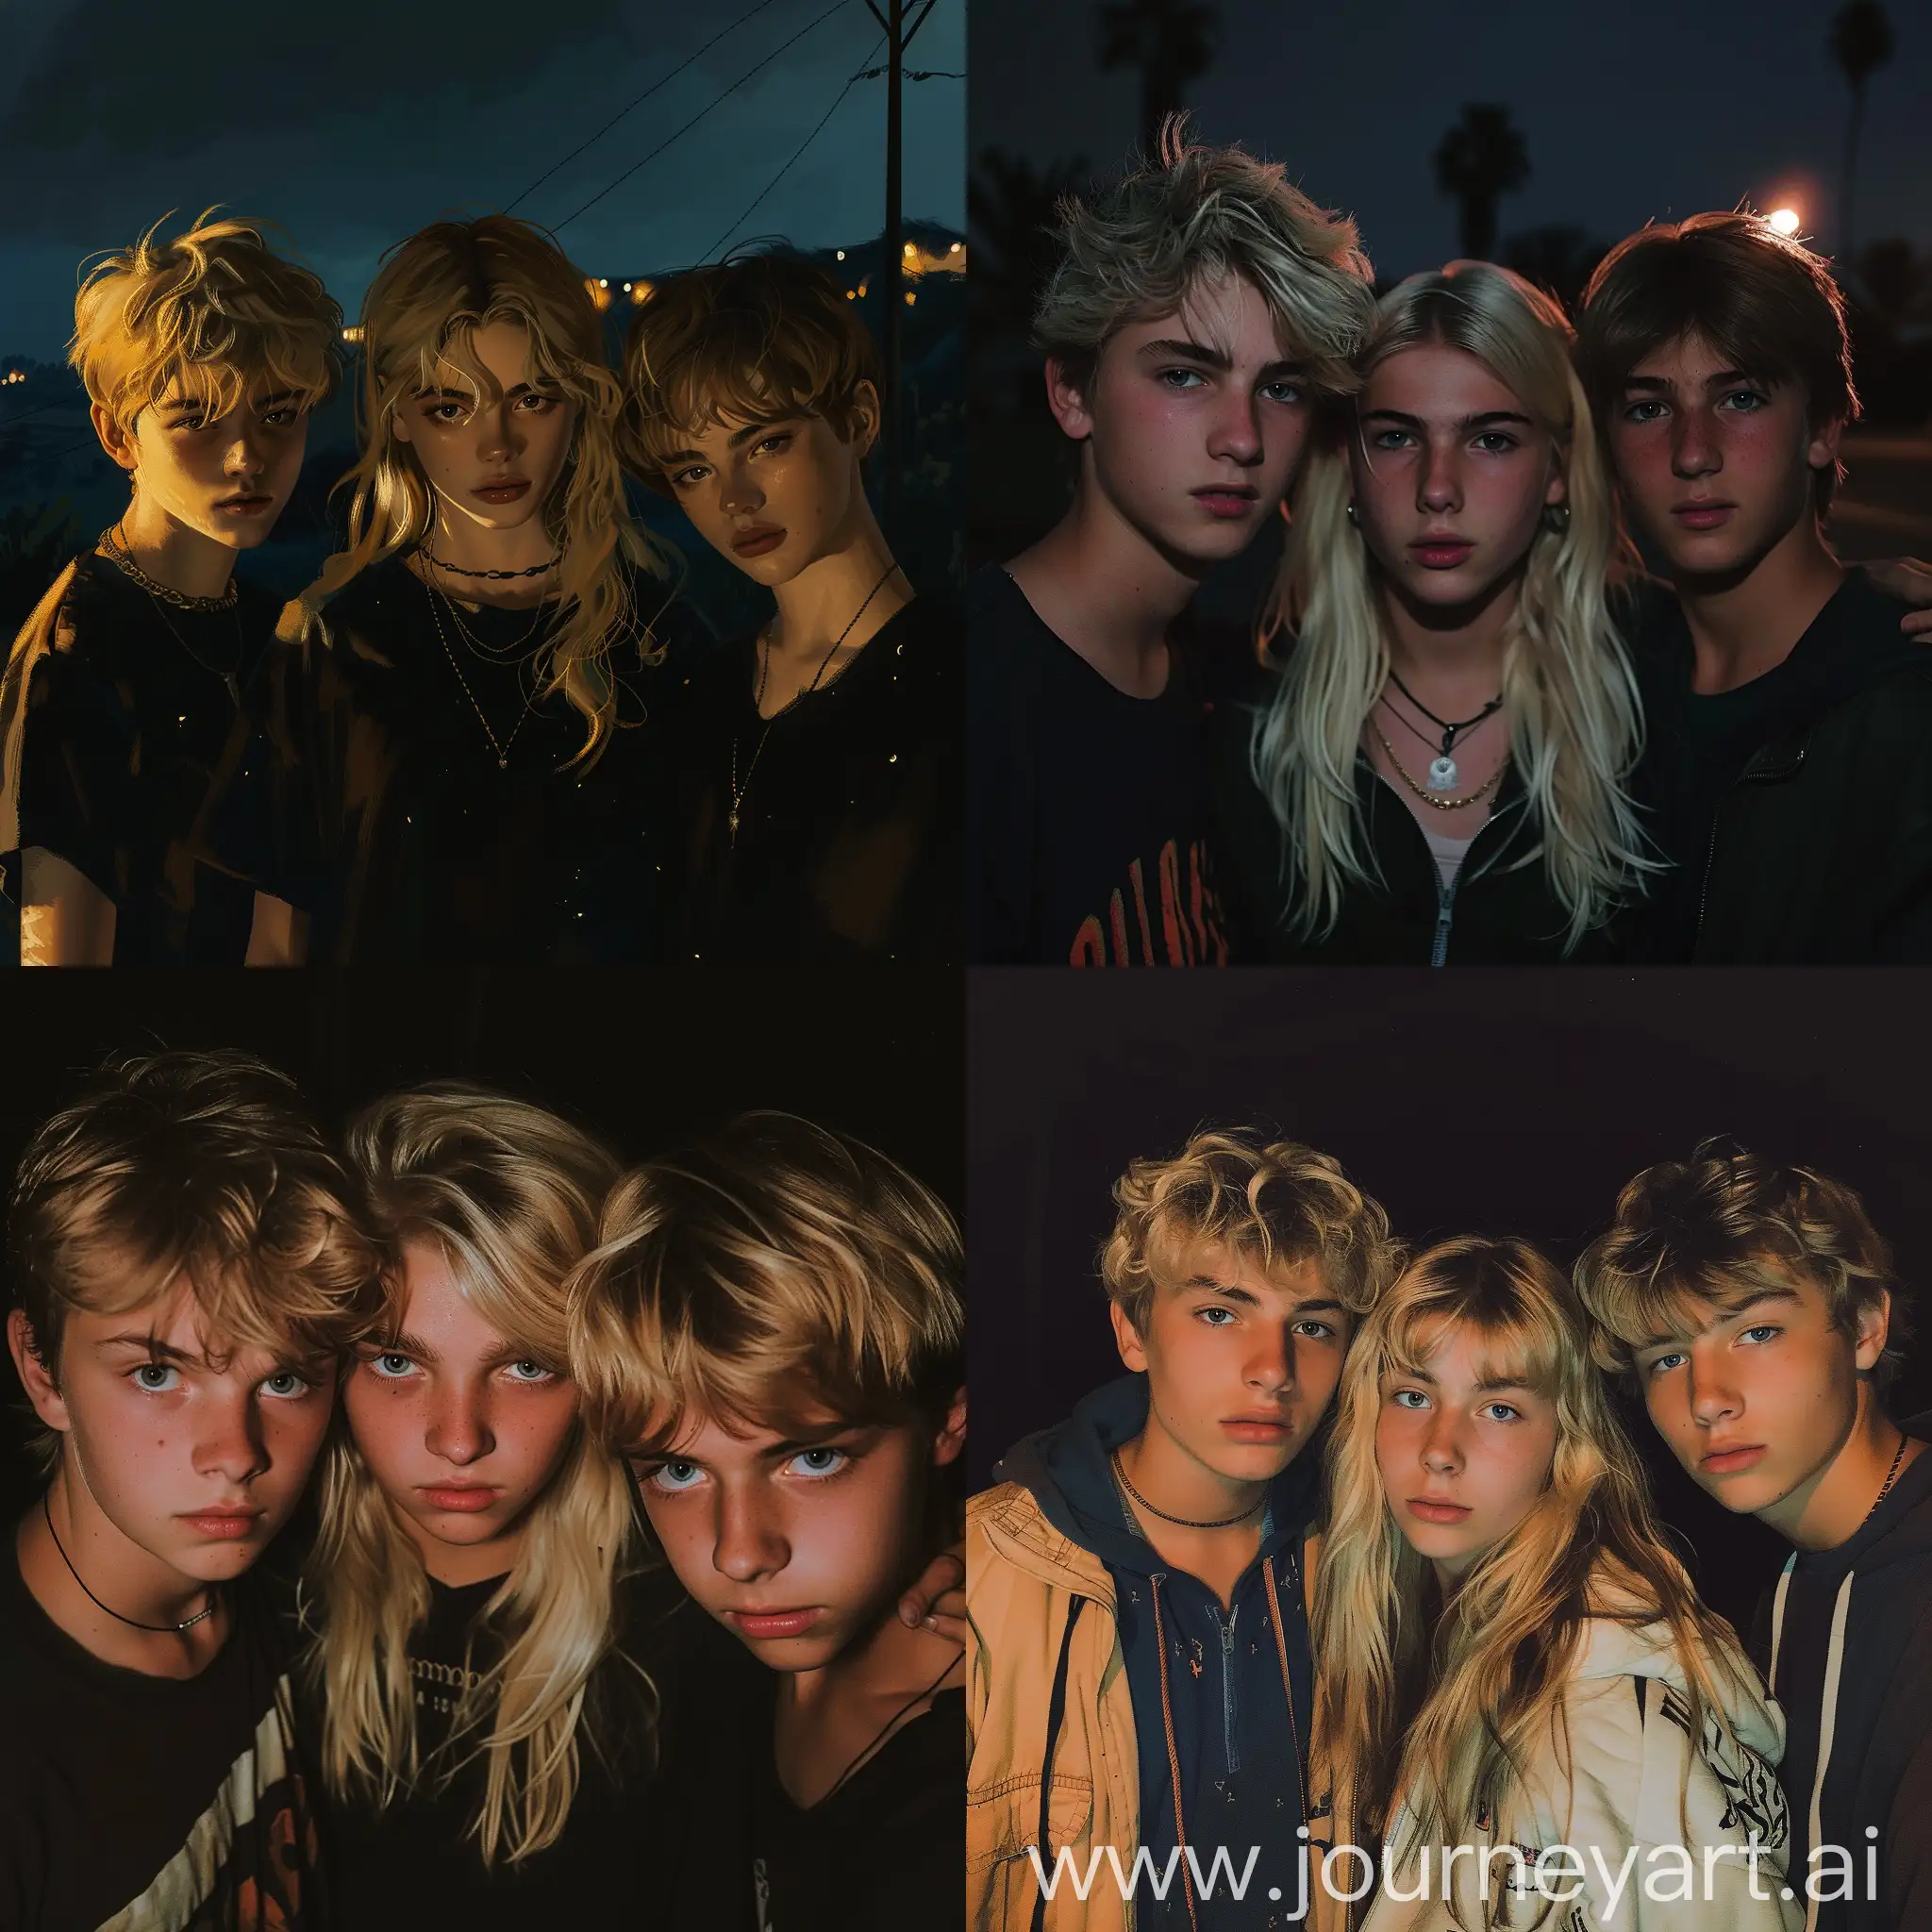 Nighttime-Bonding-Three-Blonde-Teenagers-Under-Dark-Theme